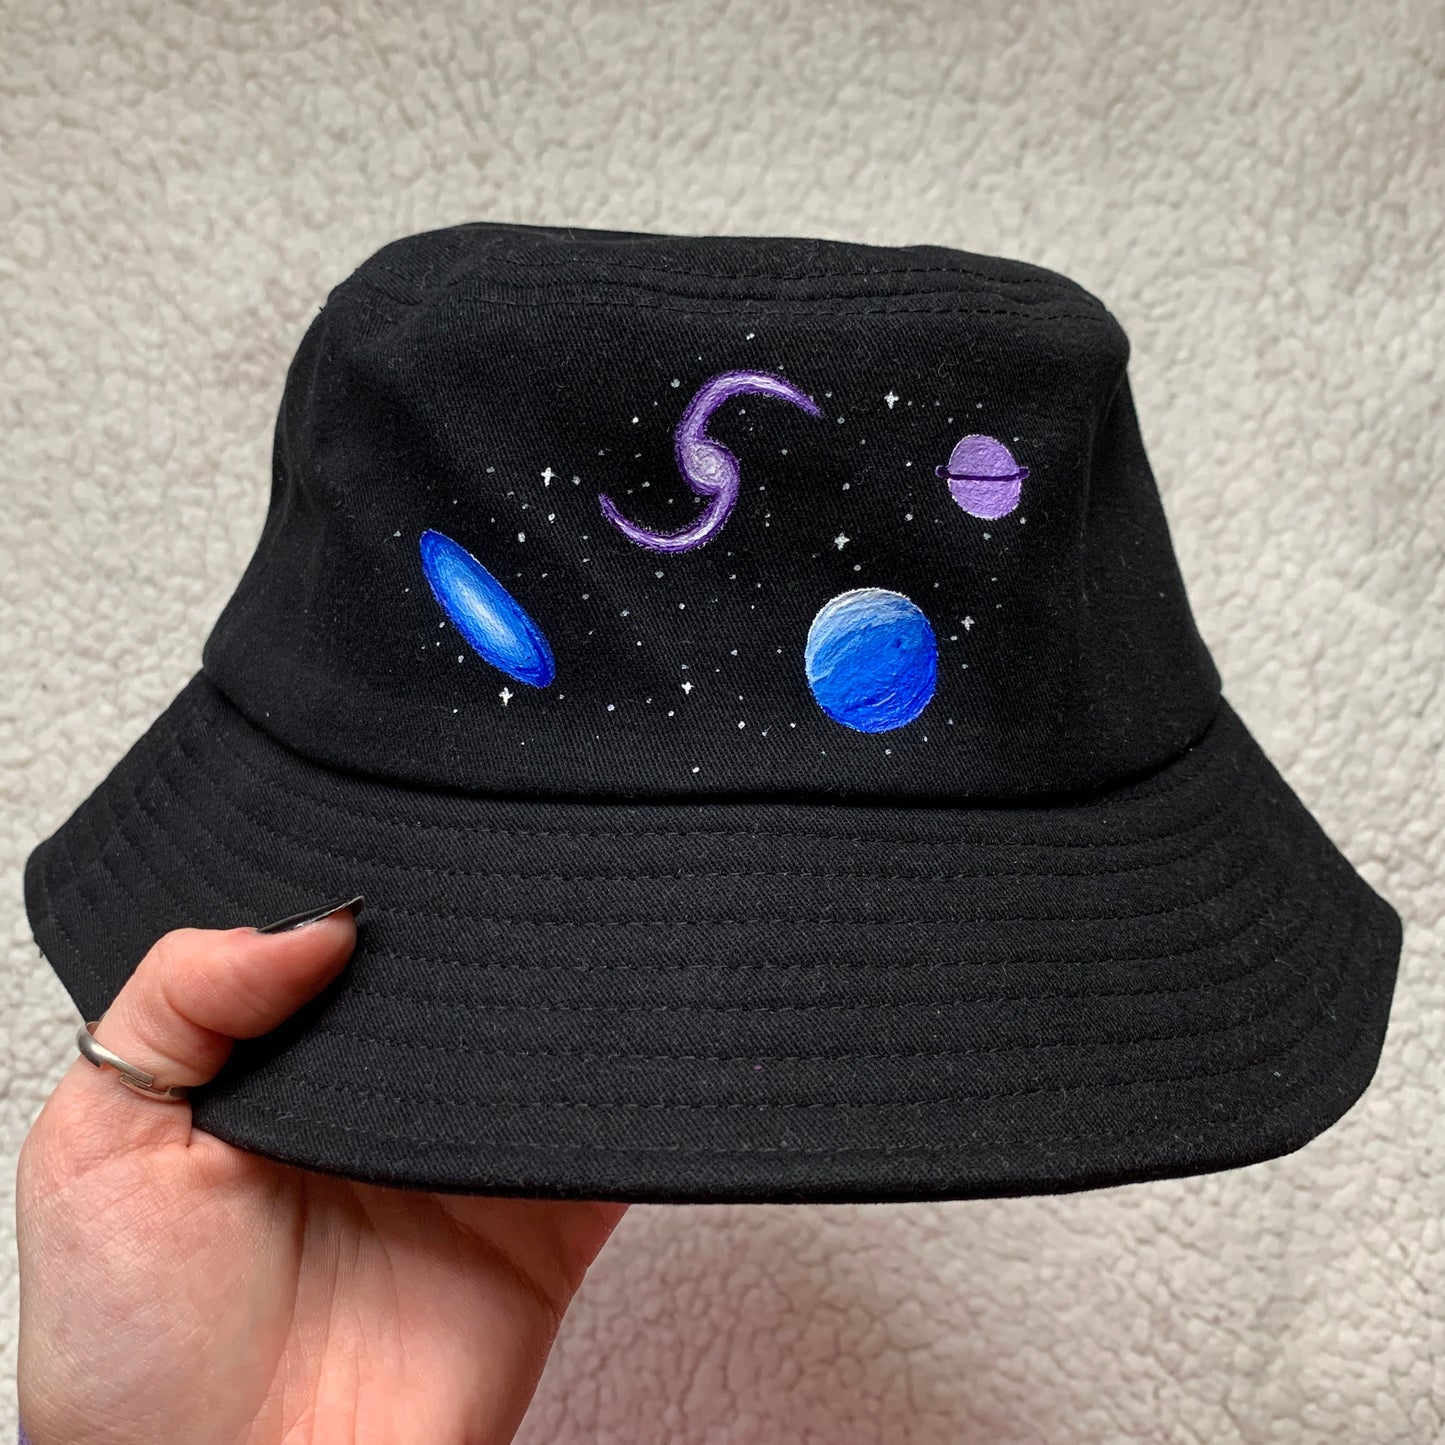 Mystery Painted Hat, Surprise Custom Bucket Hat